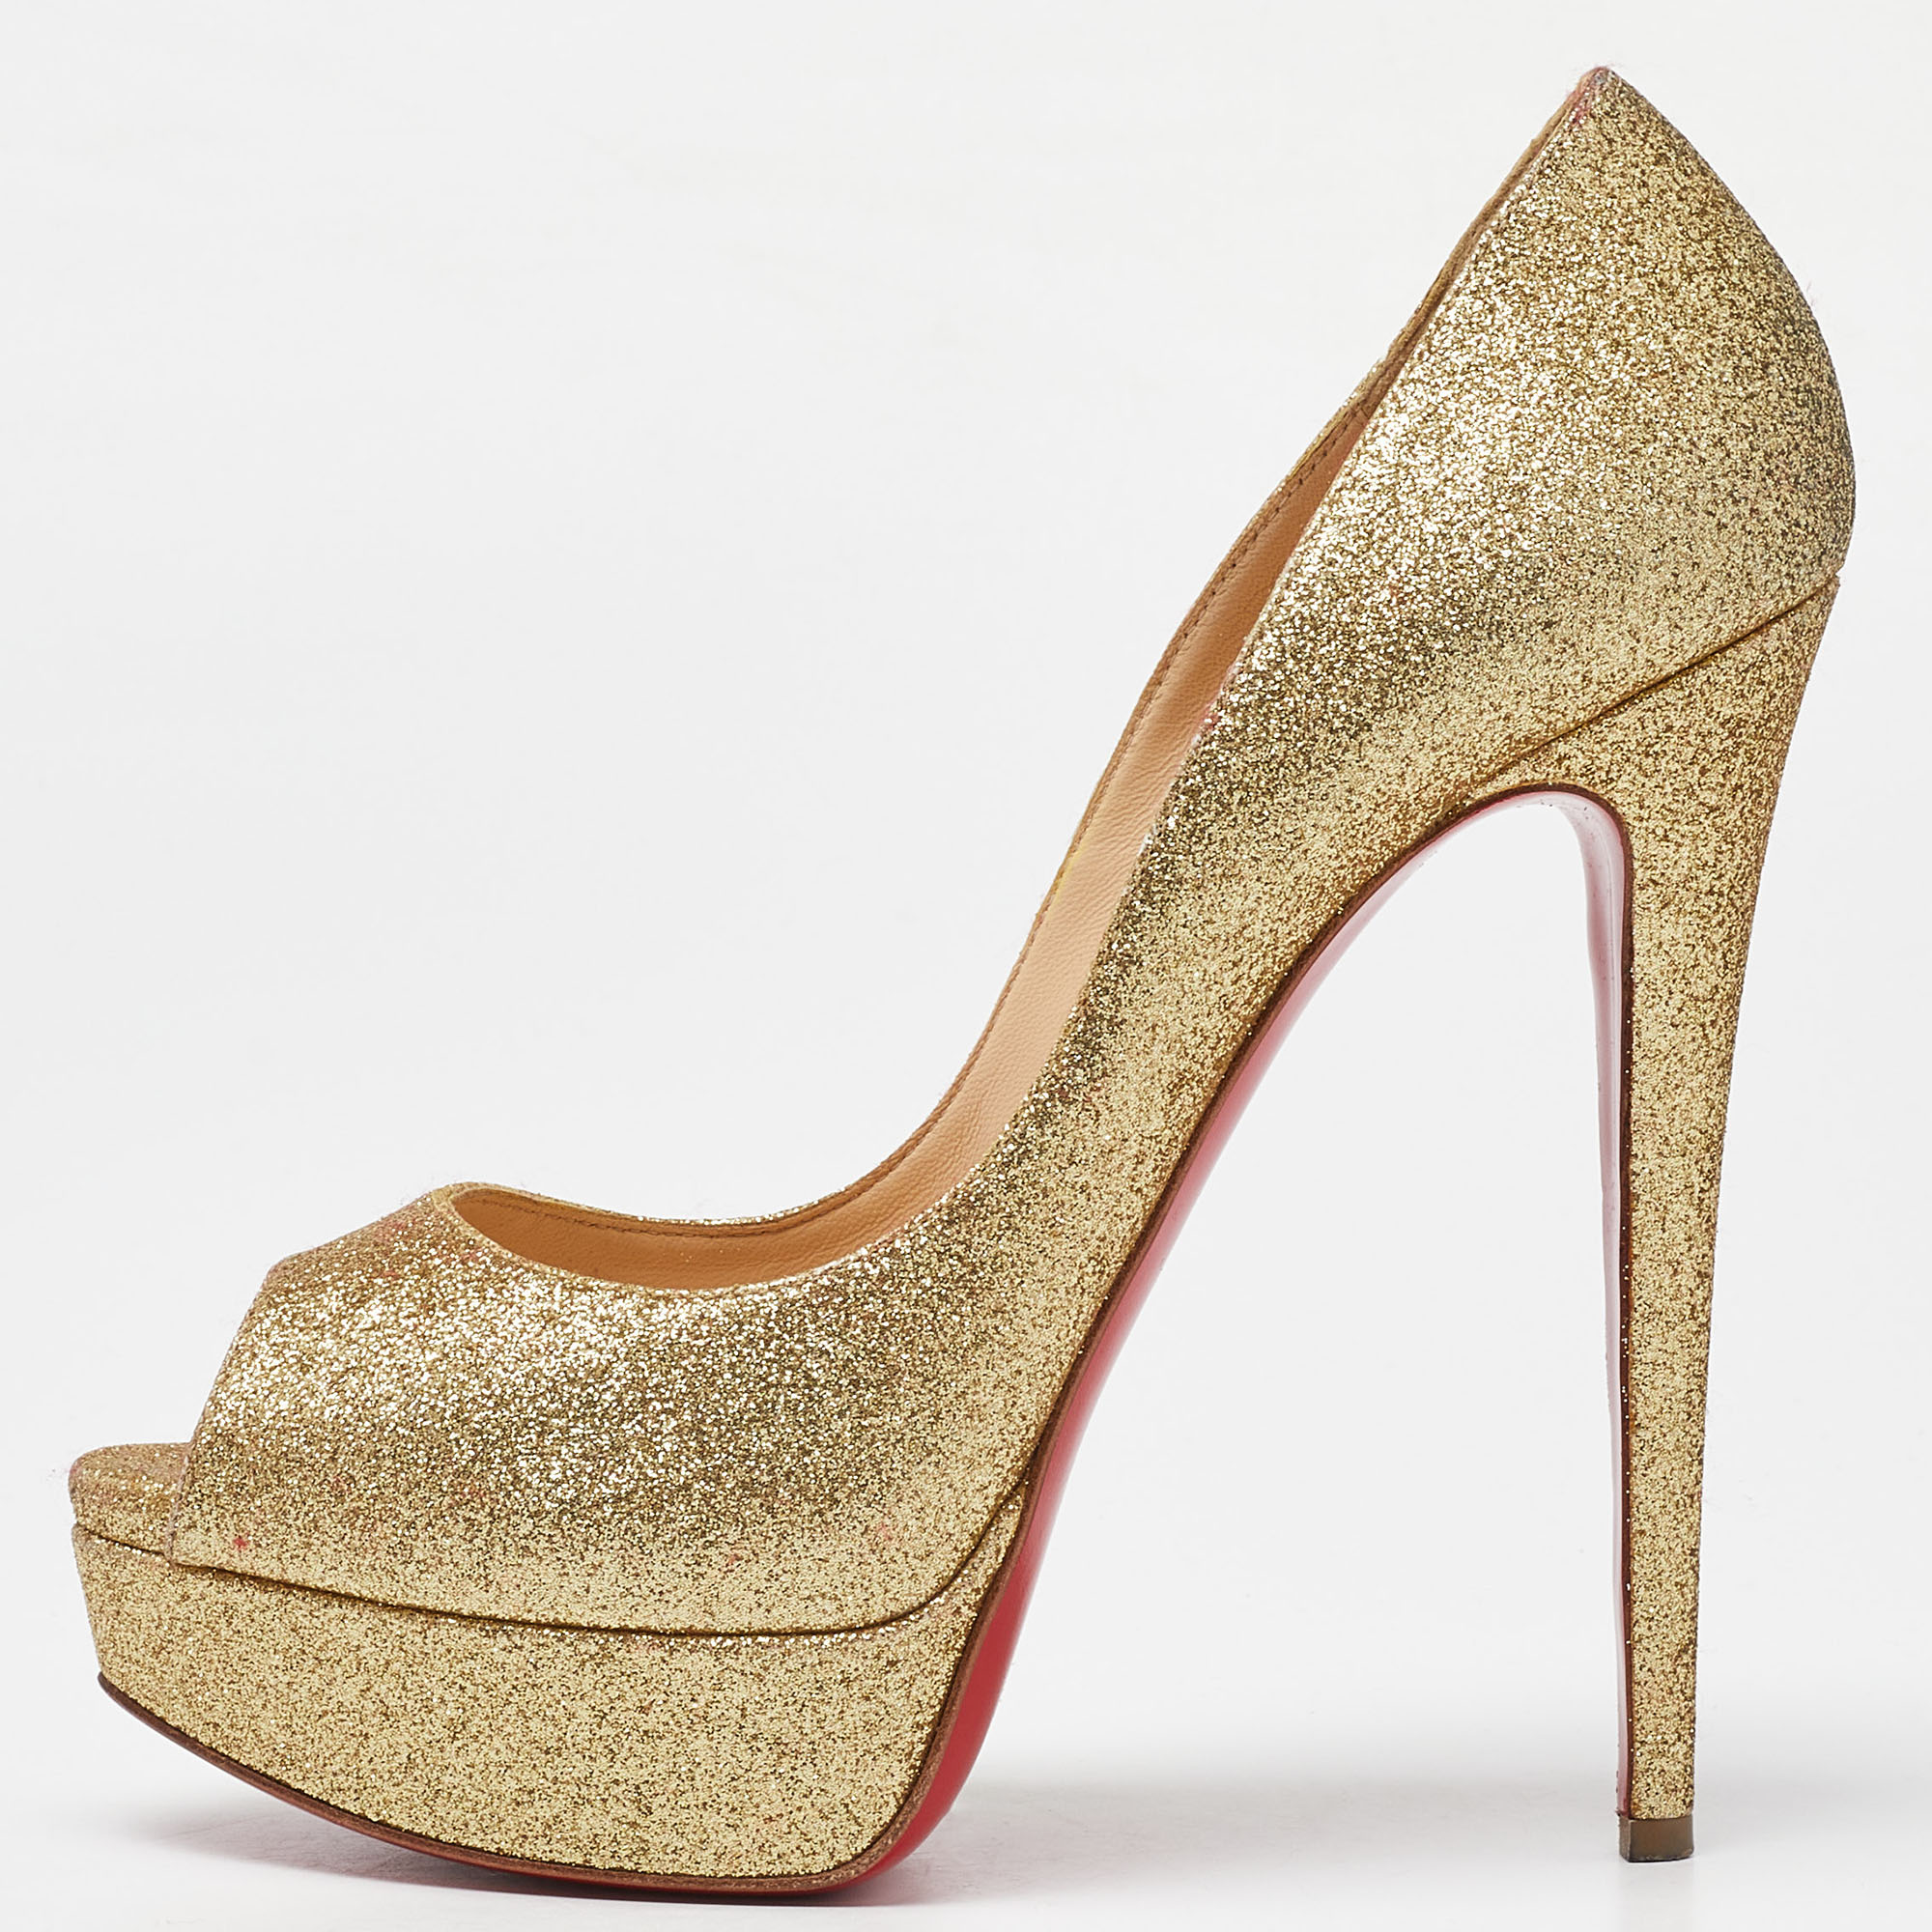 Christian louboutin gold glitter lady peep toe platform pumps size 38.5